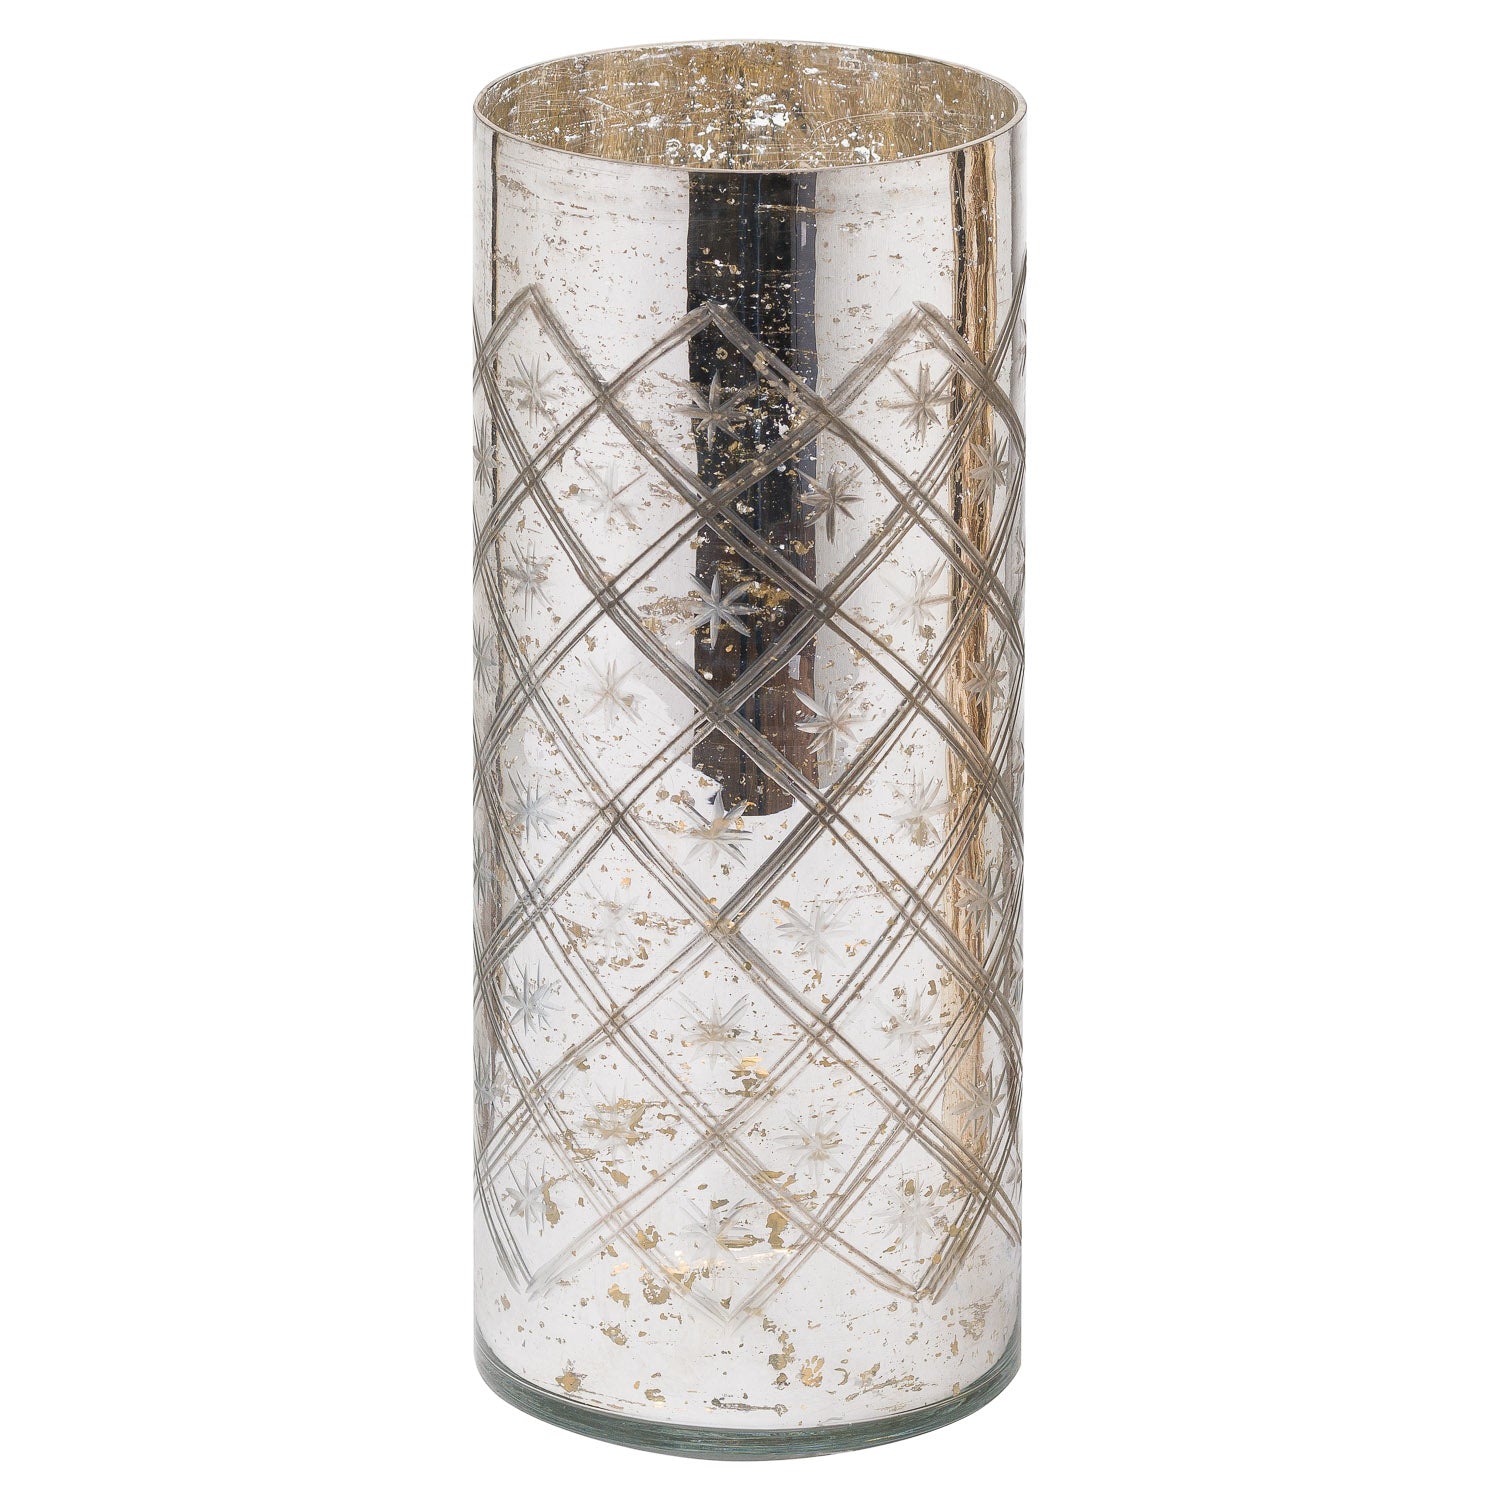 The Noel Collection Silver Foil Effect Vase